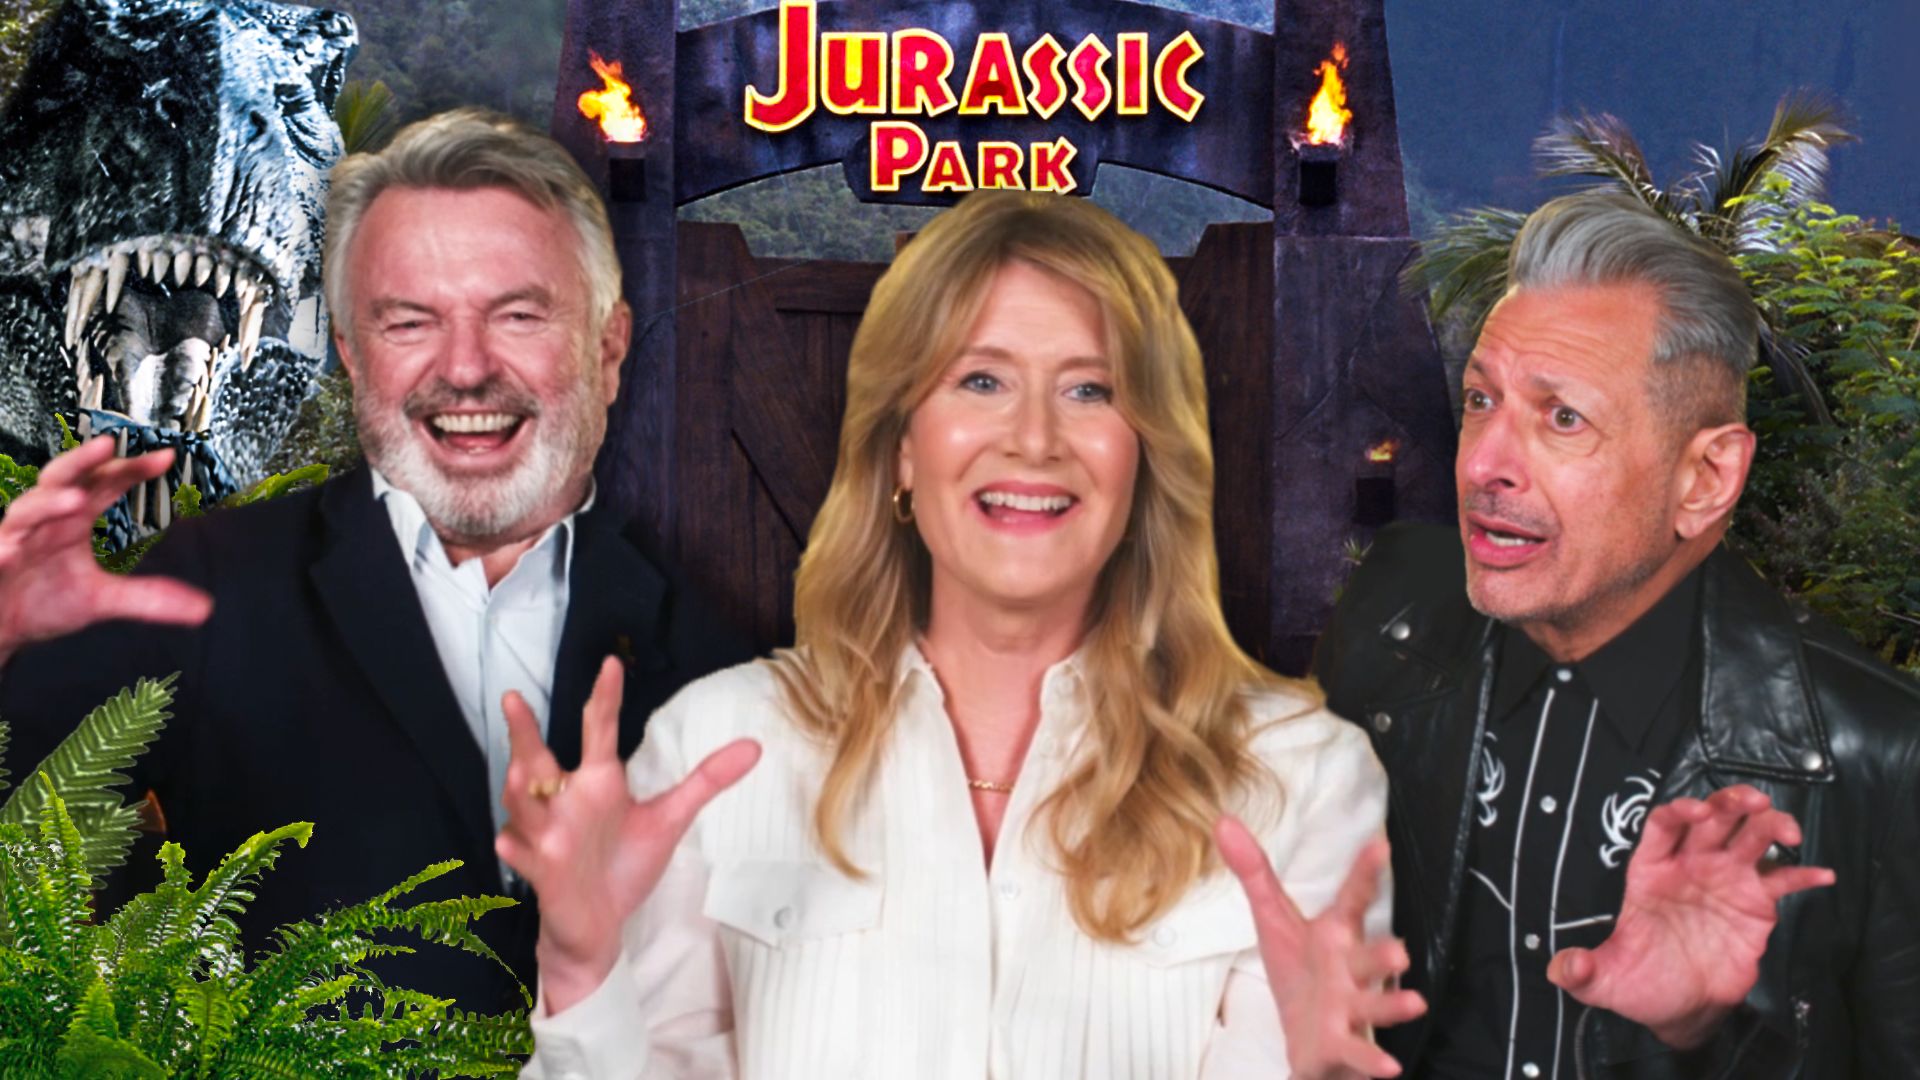 Jurassic Park: An oral history